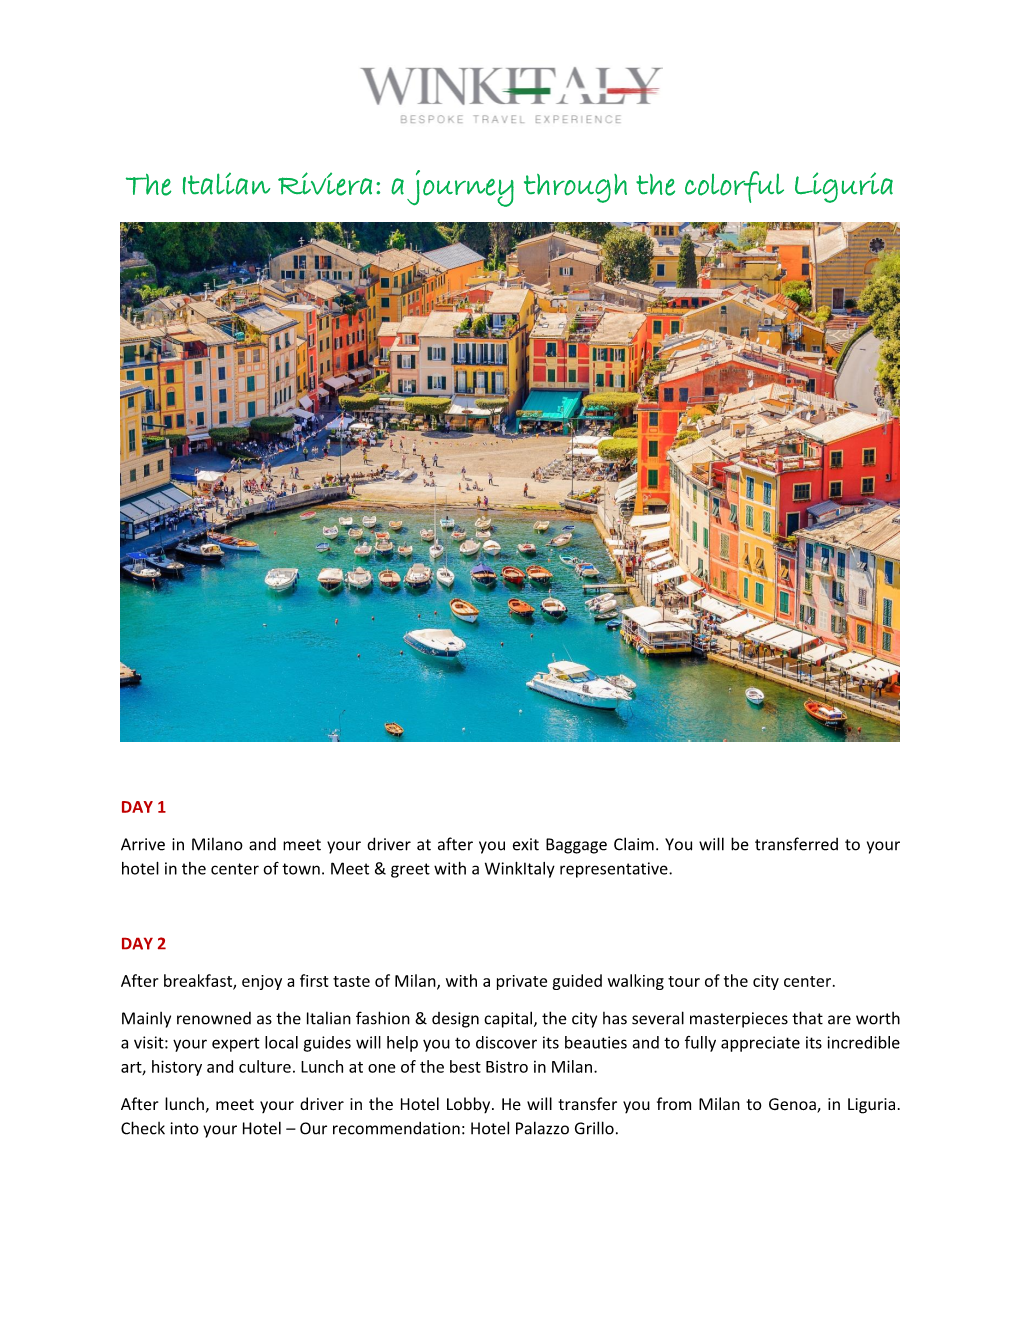 The Italian Riviera: a Journey Through the Colorful Liguria